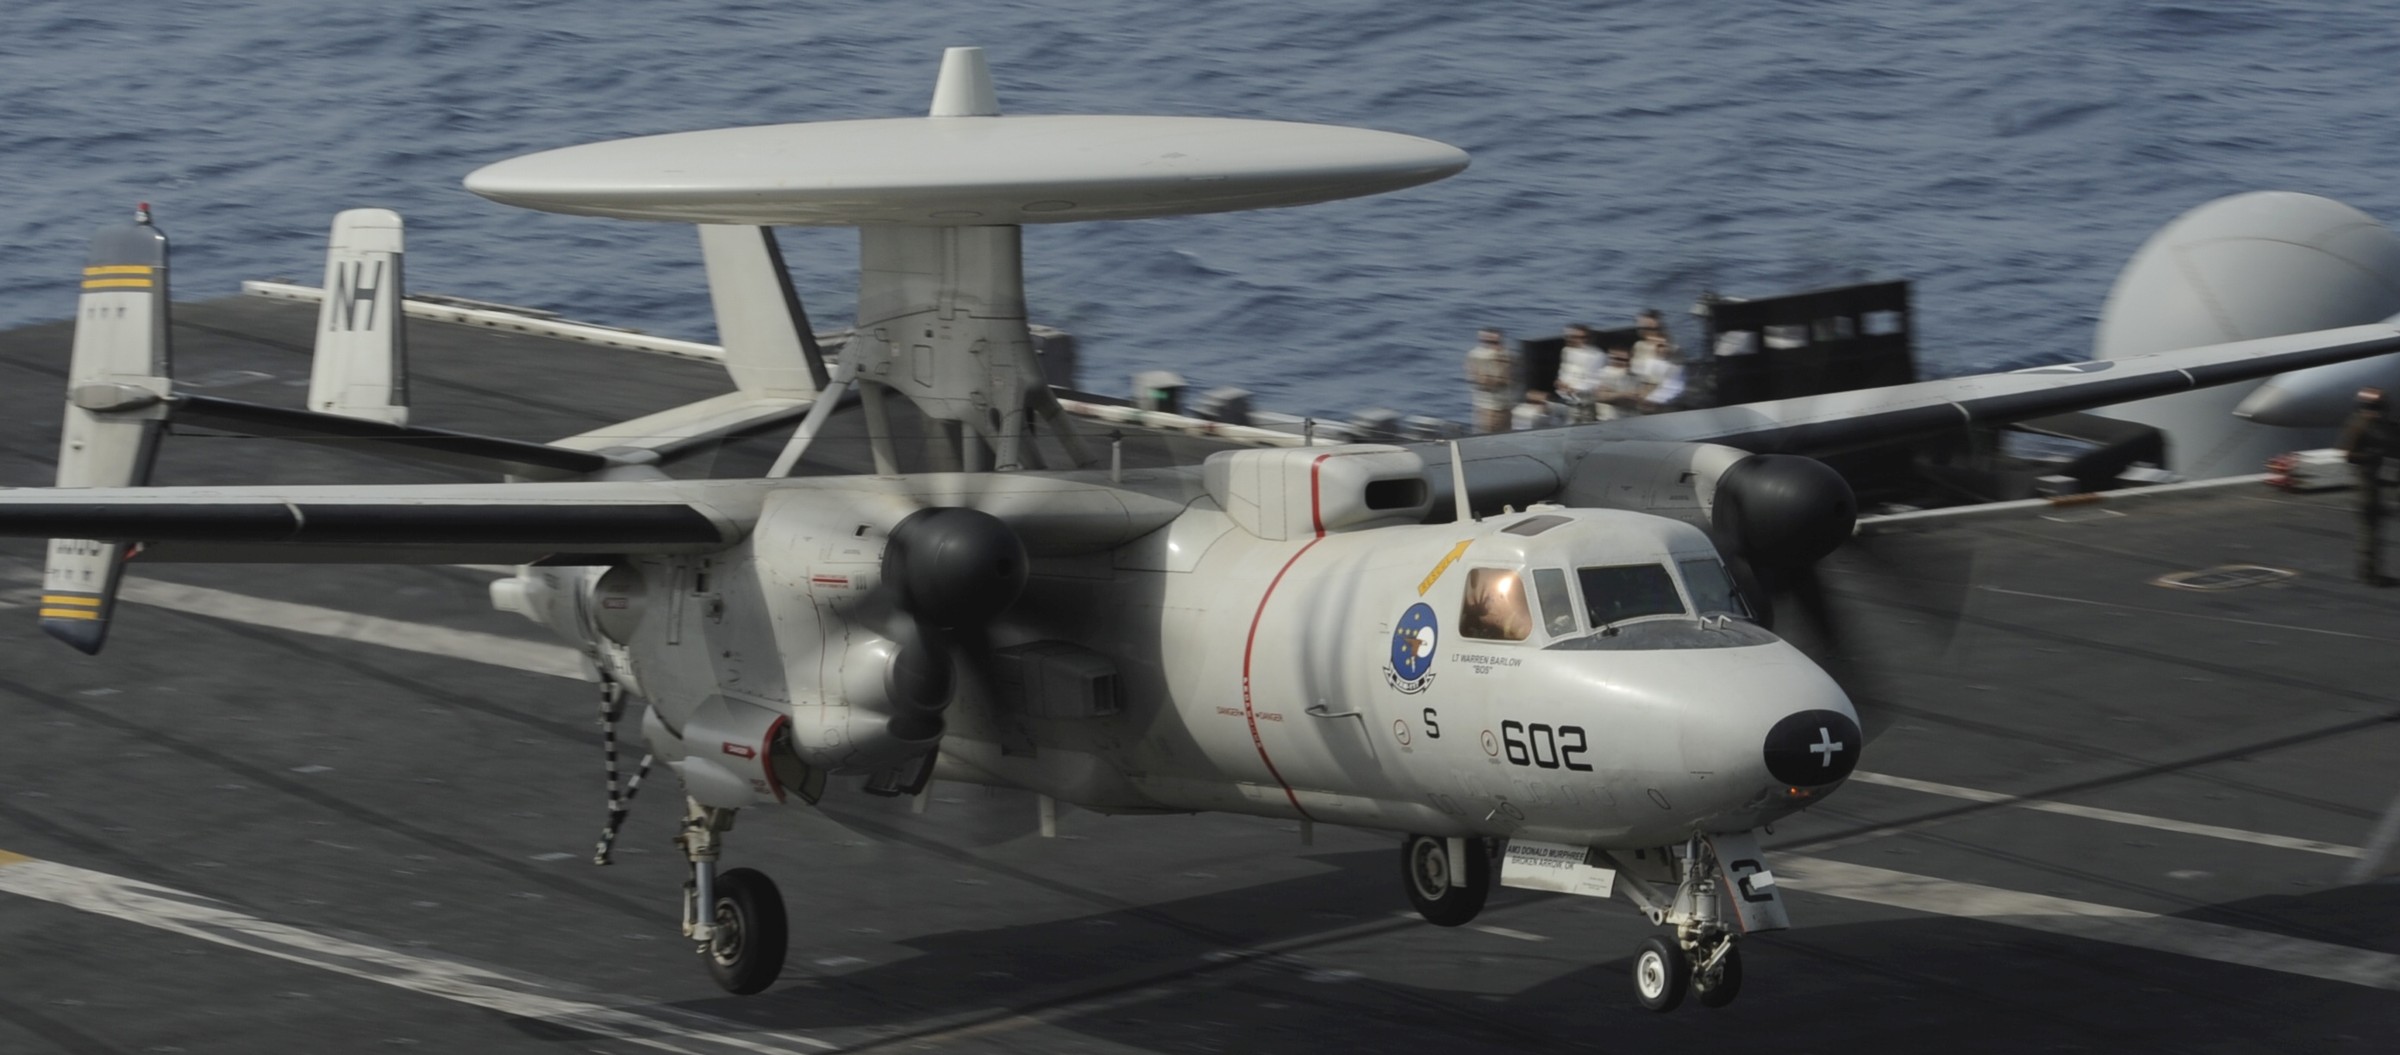 vaw-117 wallbangers carrier airborne early warning squadron navy e-2c hawkeye cvw-11 uss nimitz cvn-68 147